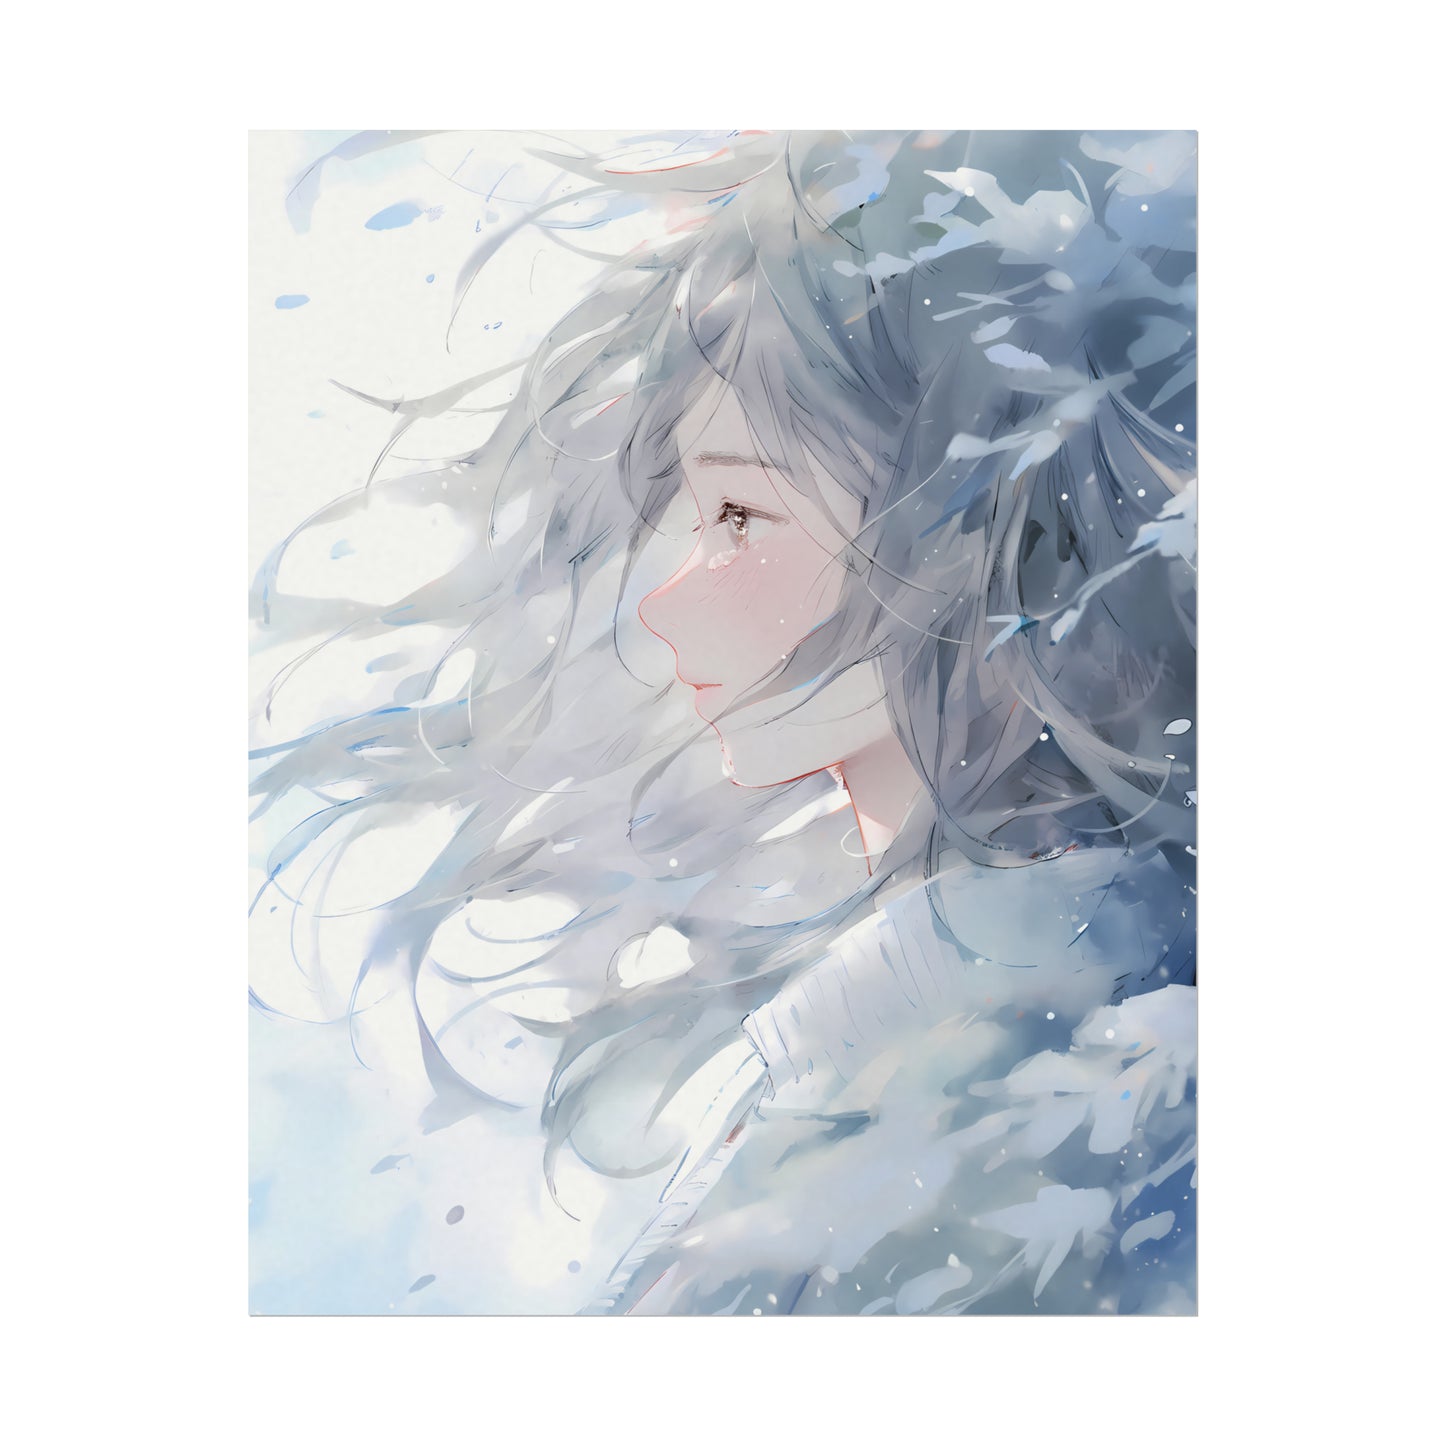 Fade Into Winter - Anime Watercolor Poster